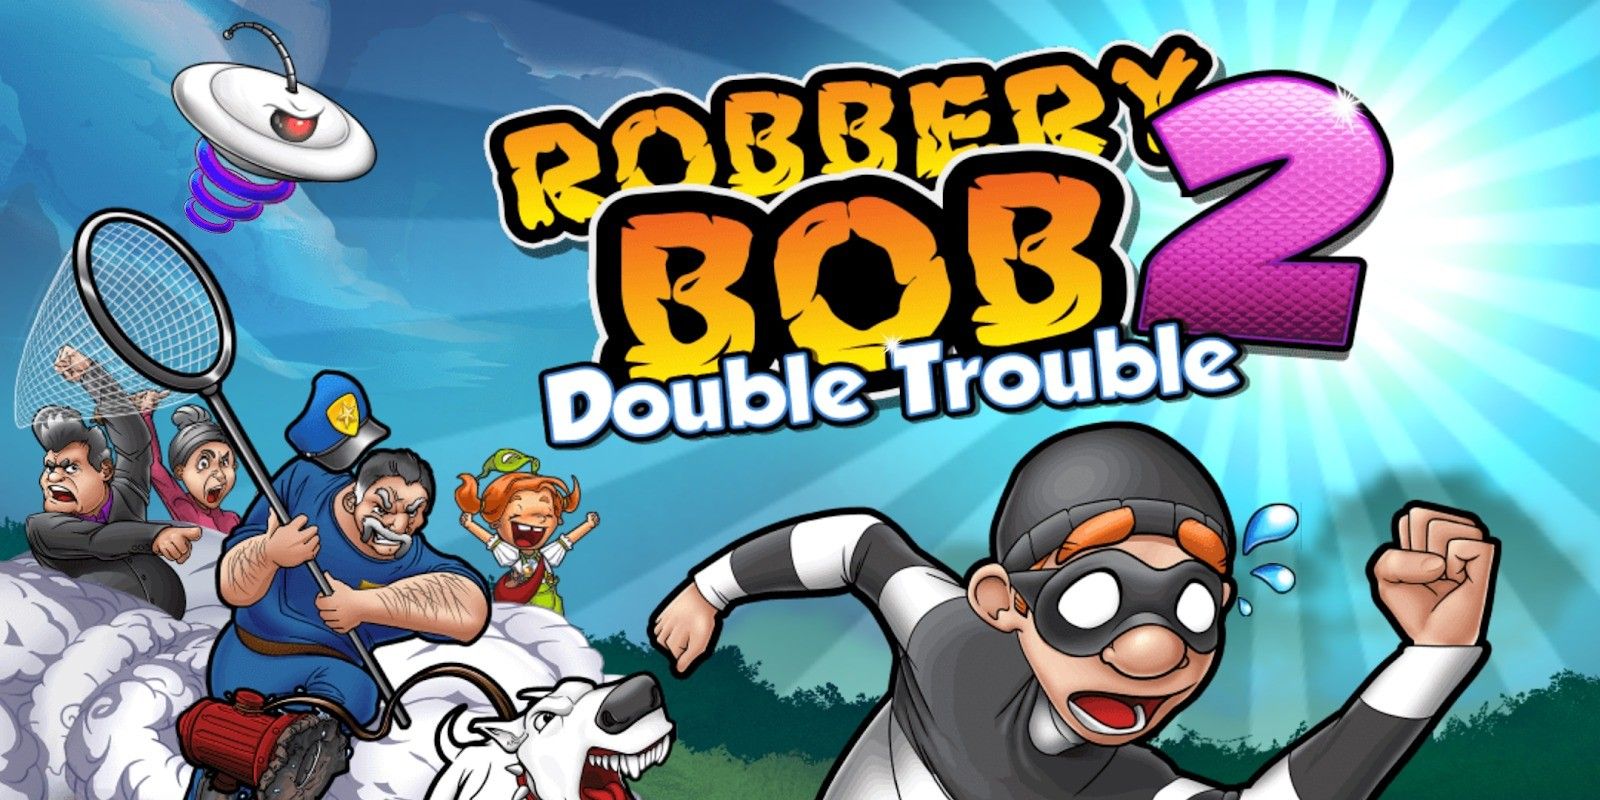 Robbery-Bob-2-Double-Trouble.jpg